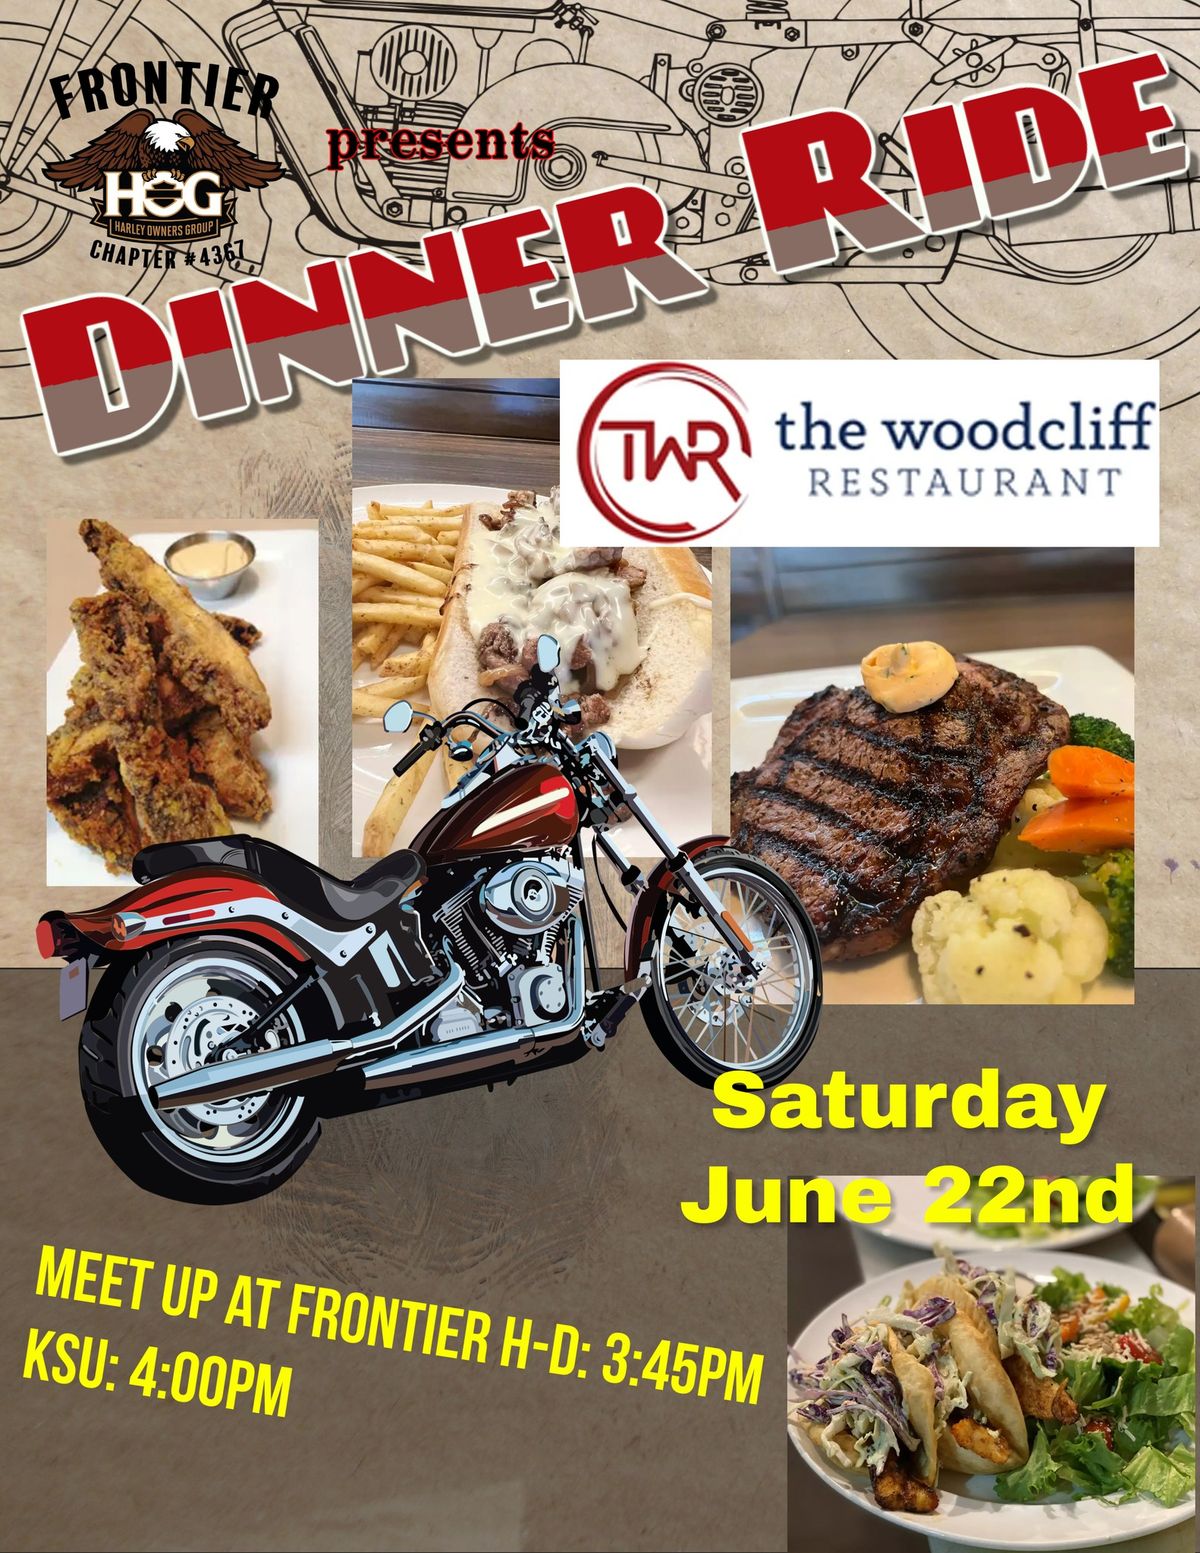 Dinner Ride - The Woodcliff Restaurant